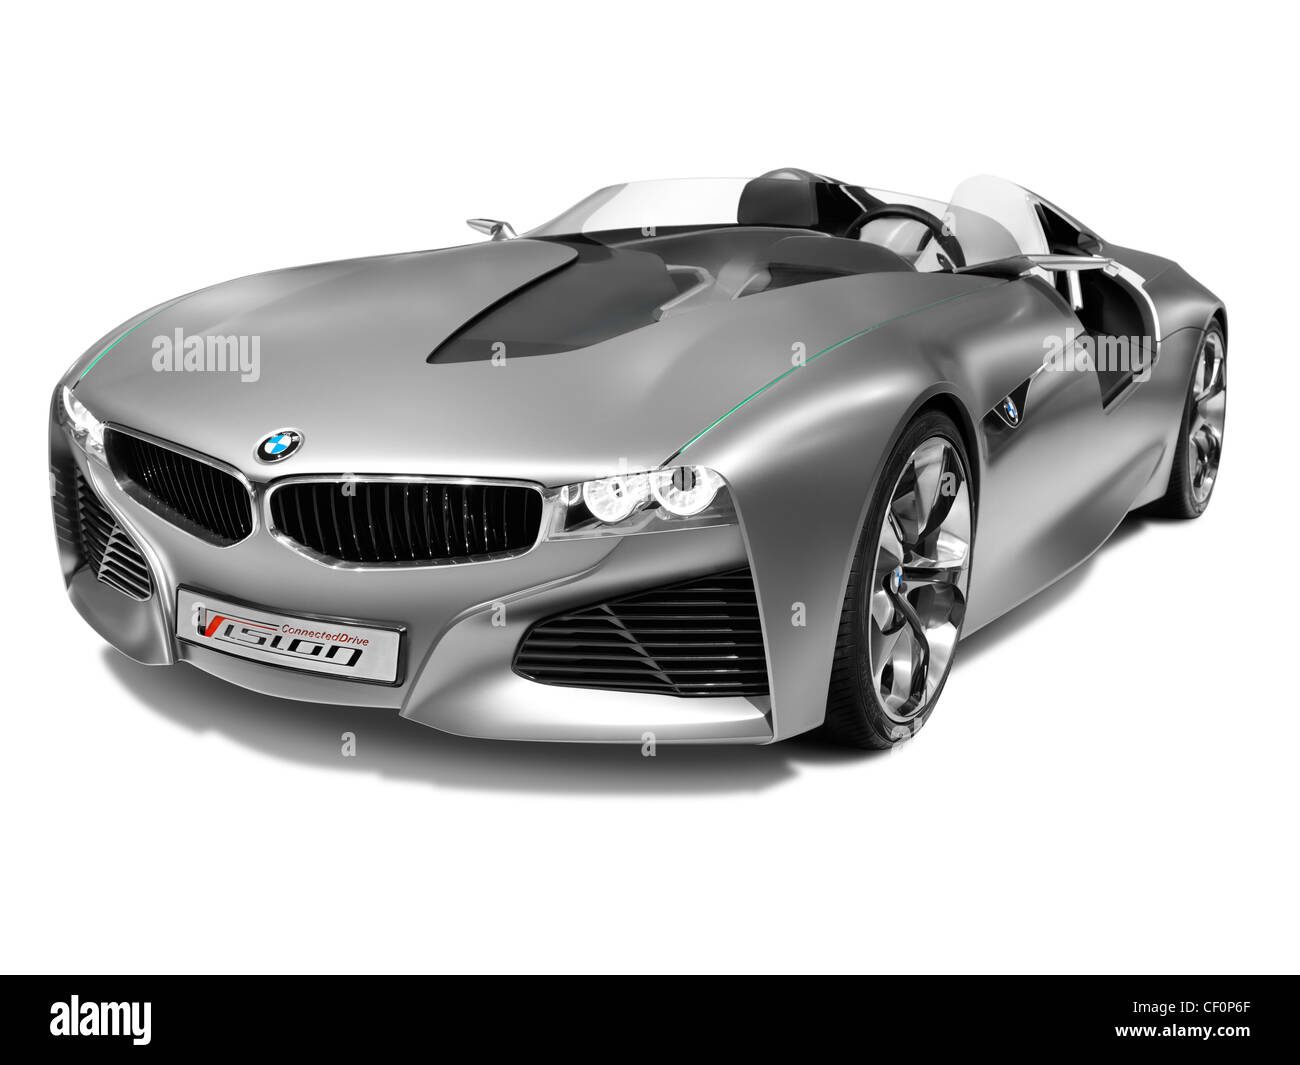 Lizenz und Drucke bei MaximImages.com - BMW Luxusauto, Automobil Stock Foto. Stockfoto